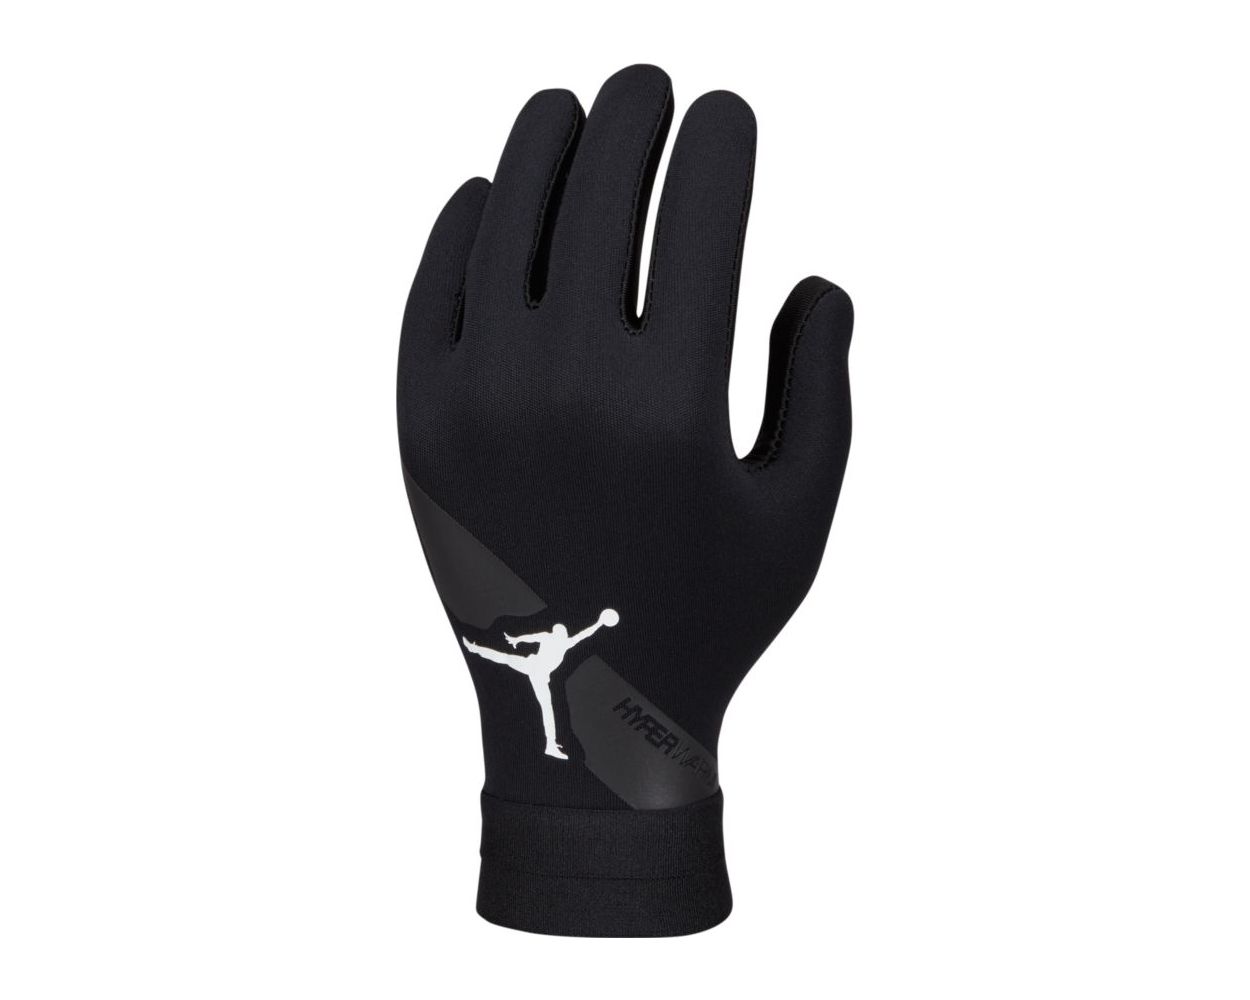 Nike PSG Hyperwarm Glove Youth - Black